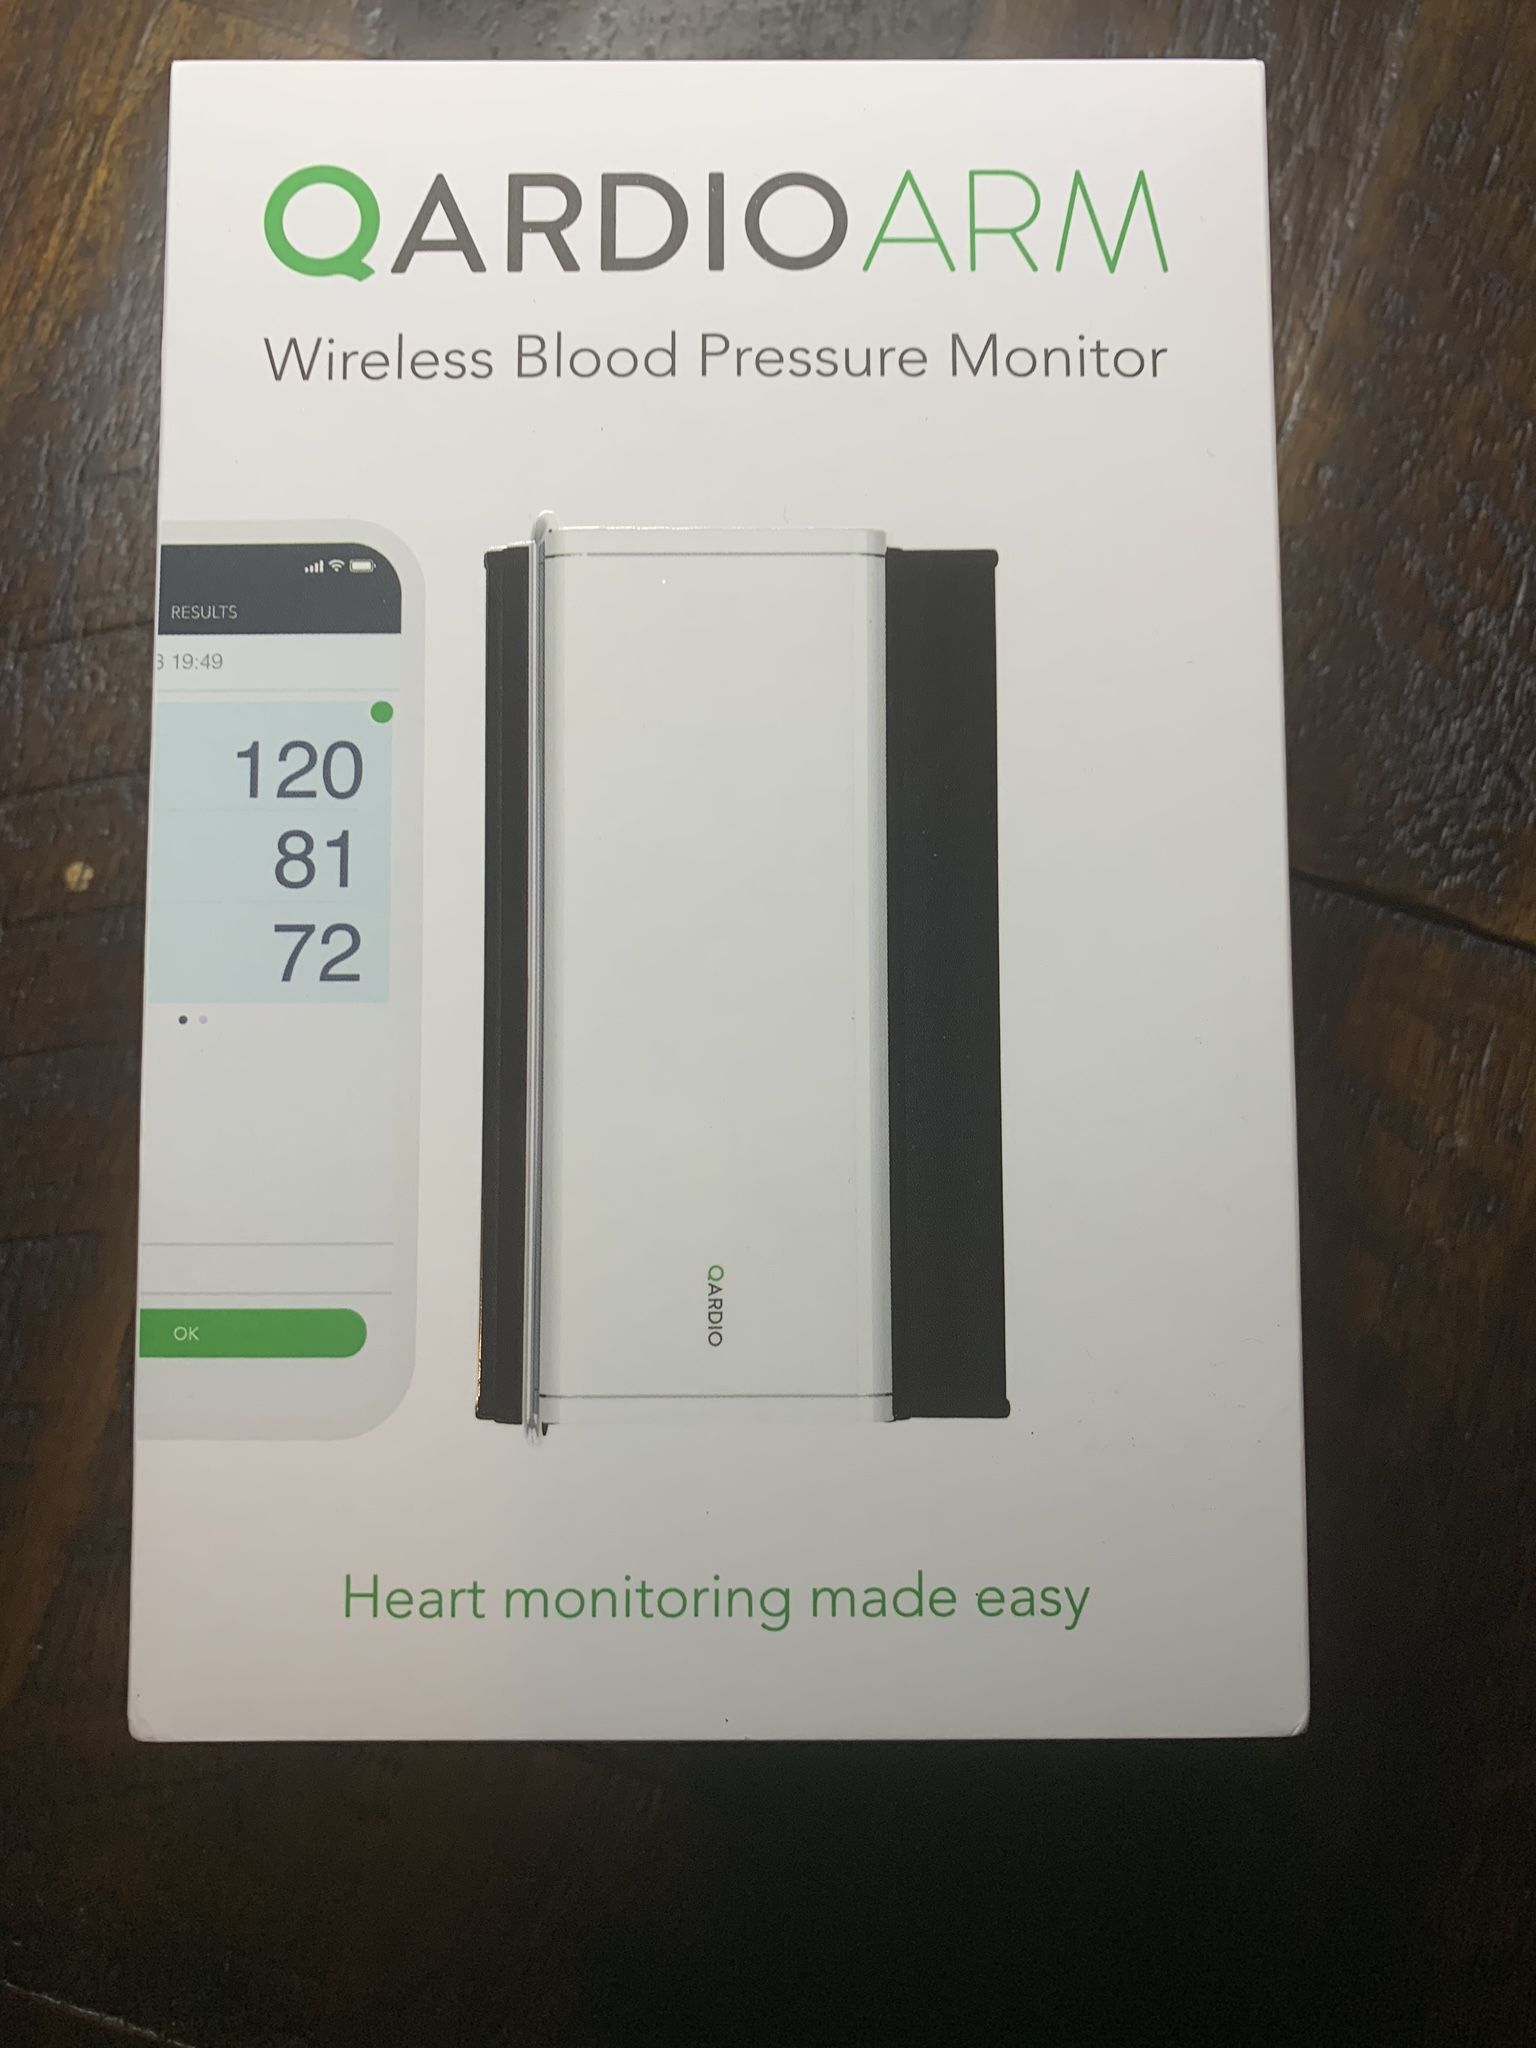 Best iPhone Compatible Blood Pressure Monitor: Qardioarm Review